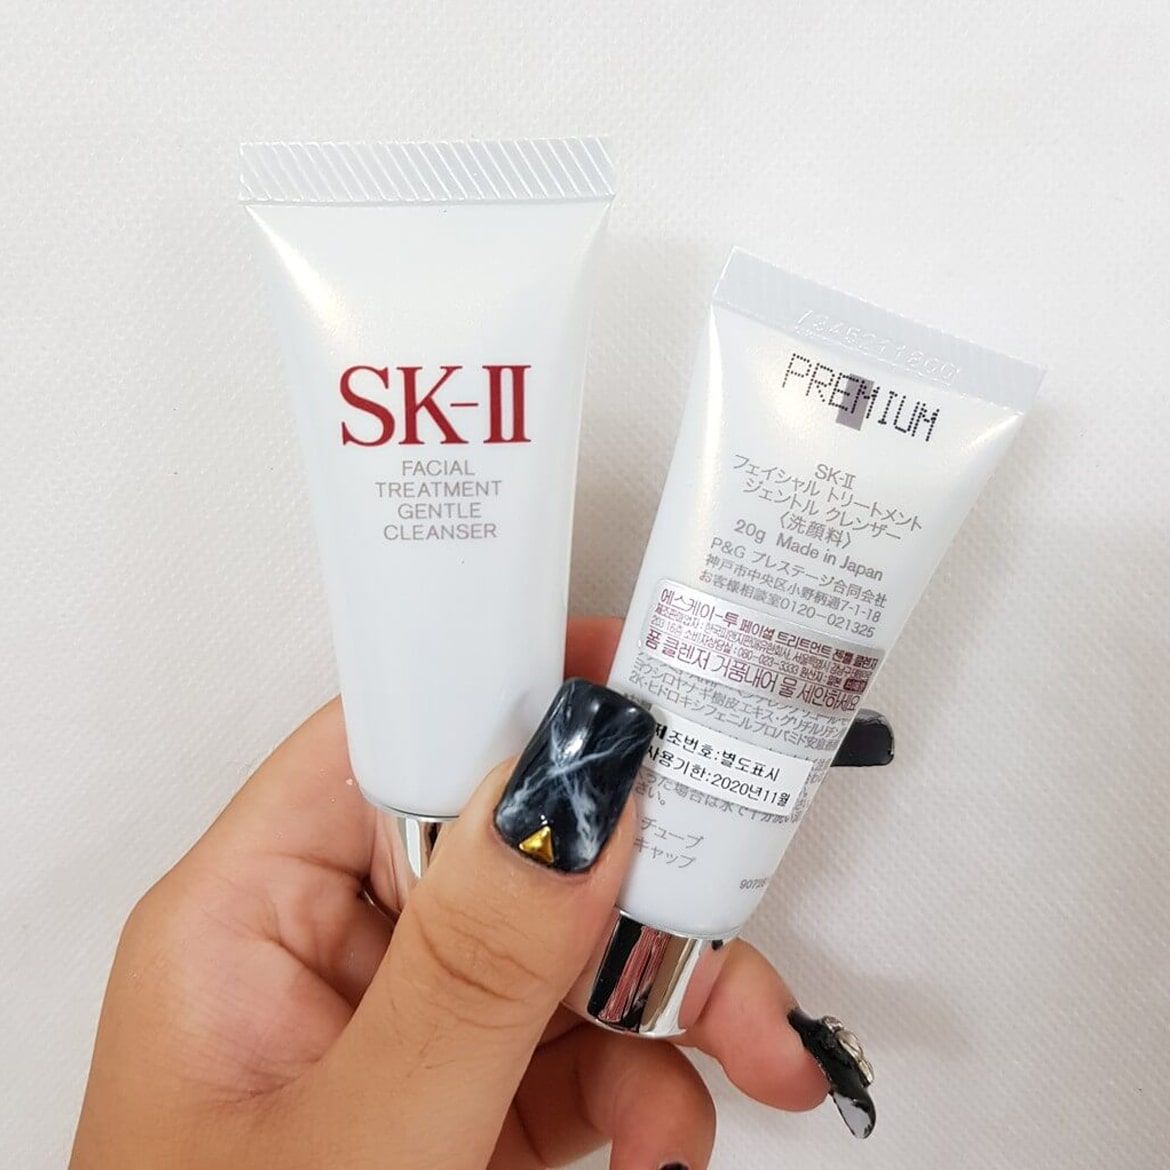  Sữa Rửa Mặt SK-II Facial Treatment Gentle Cleanser 20g 